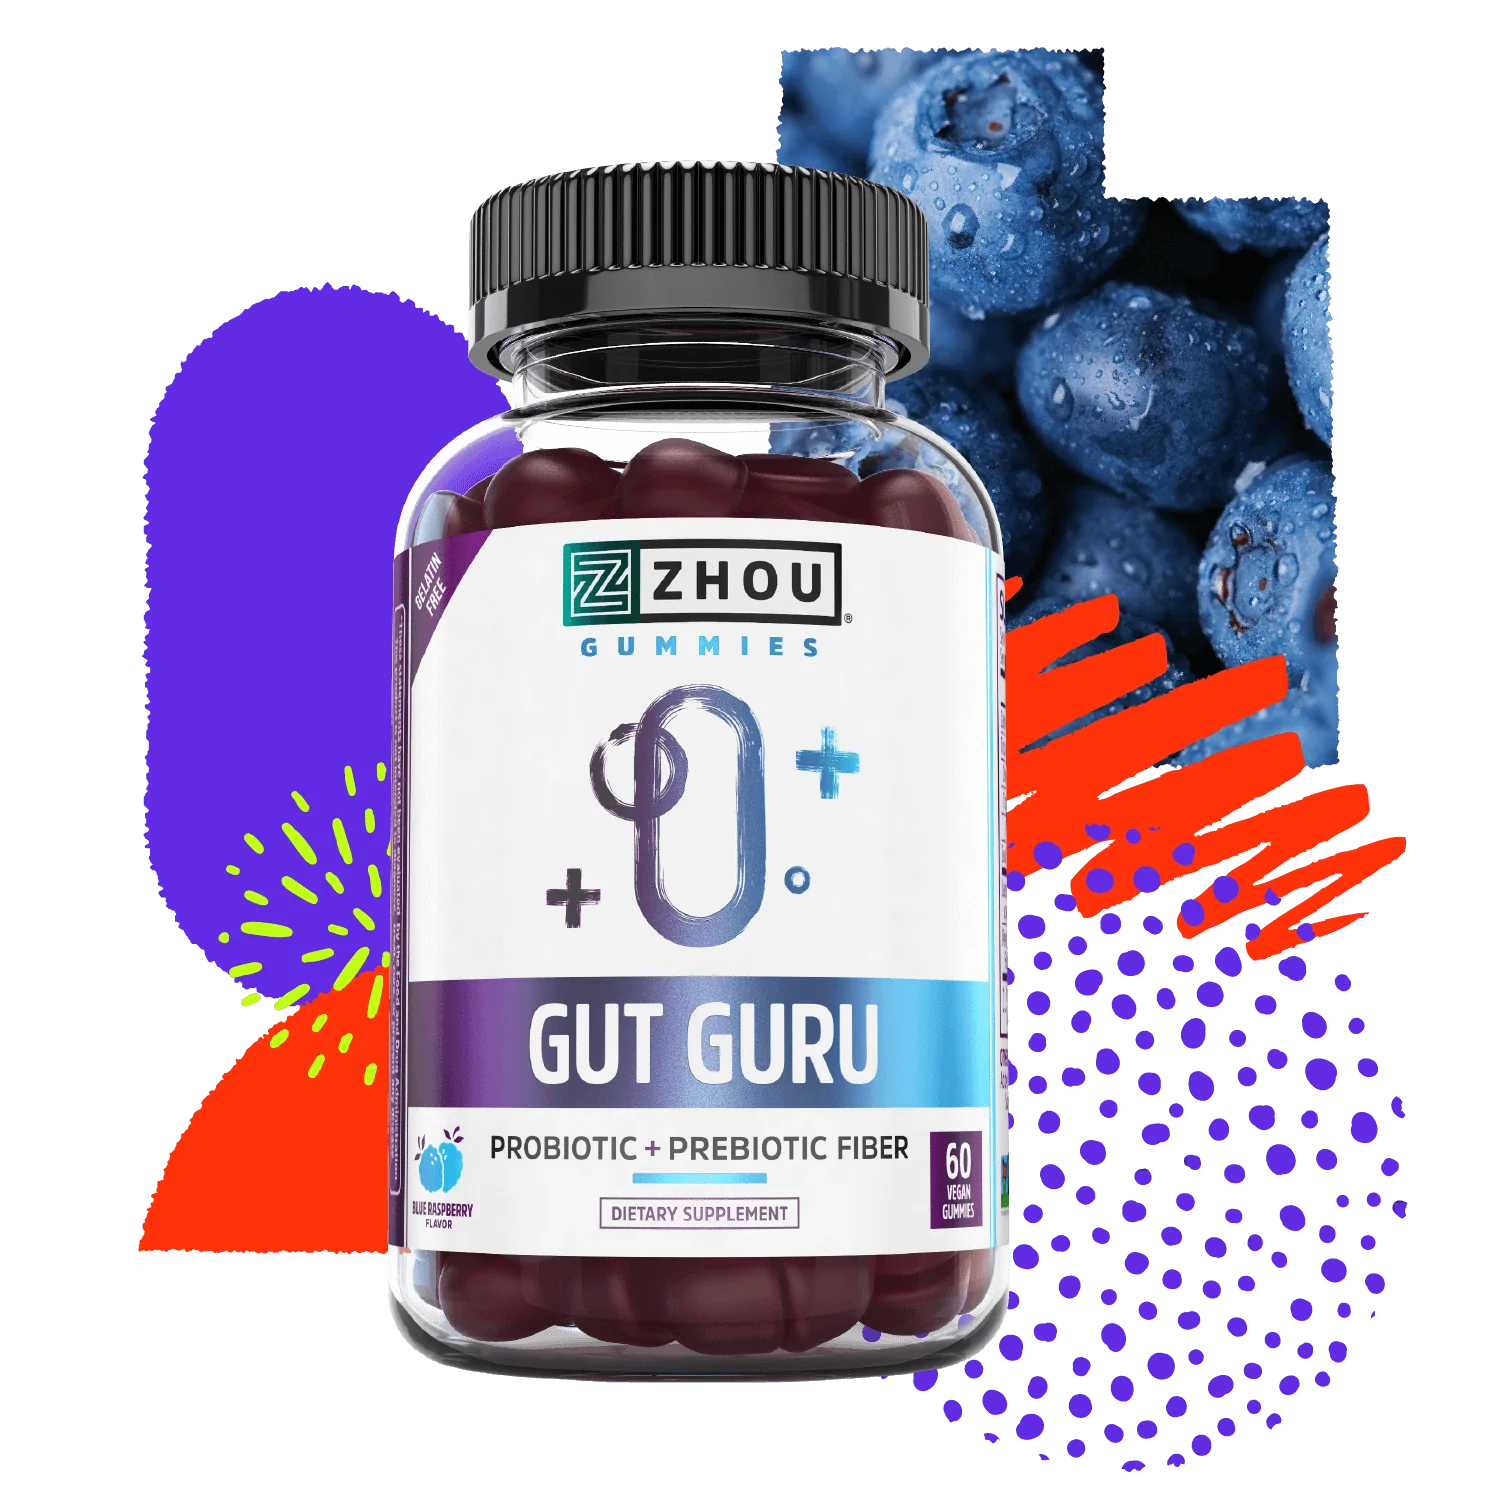 Gut Guru Probiotic + Prebiotic